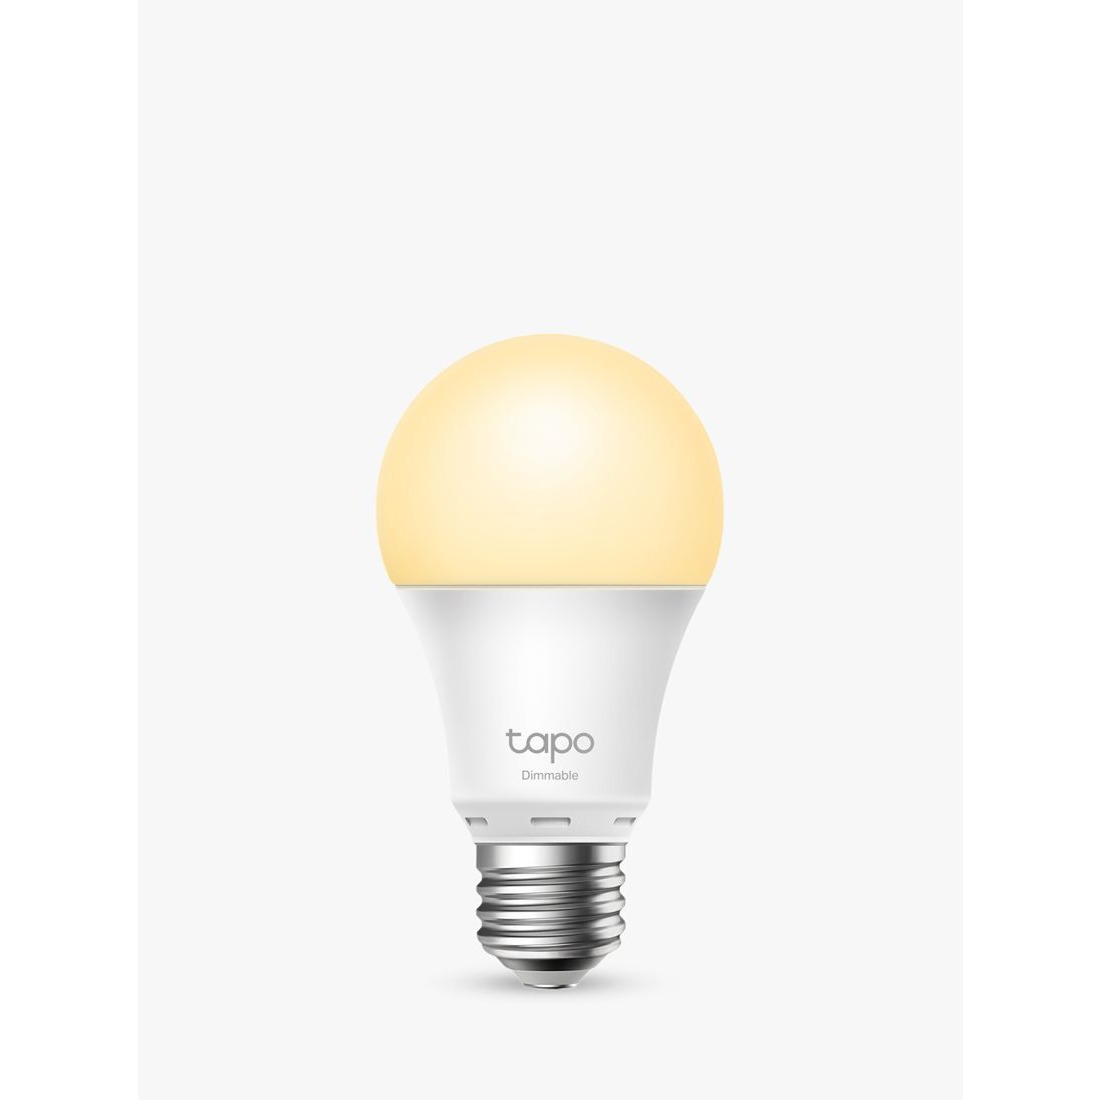 TP-Link Tapo L510E Wi-Fi, E27, Smart LED Light Bulb with Dimmable Light - image 1